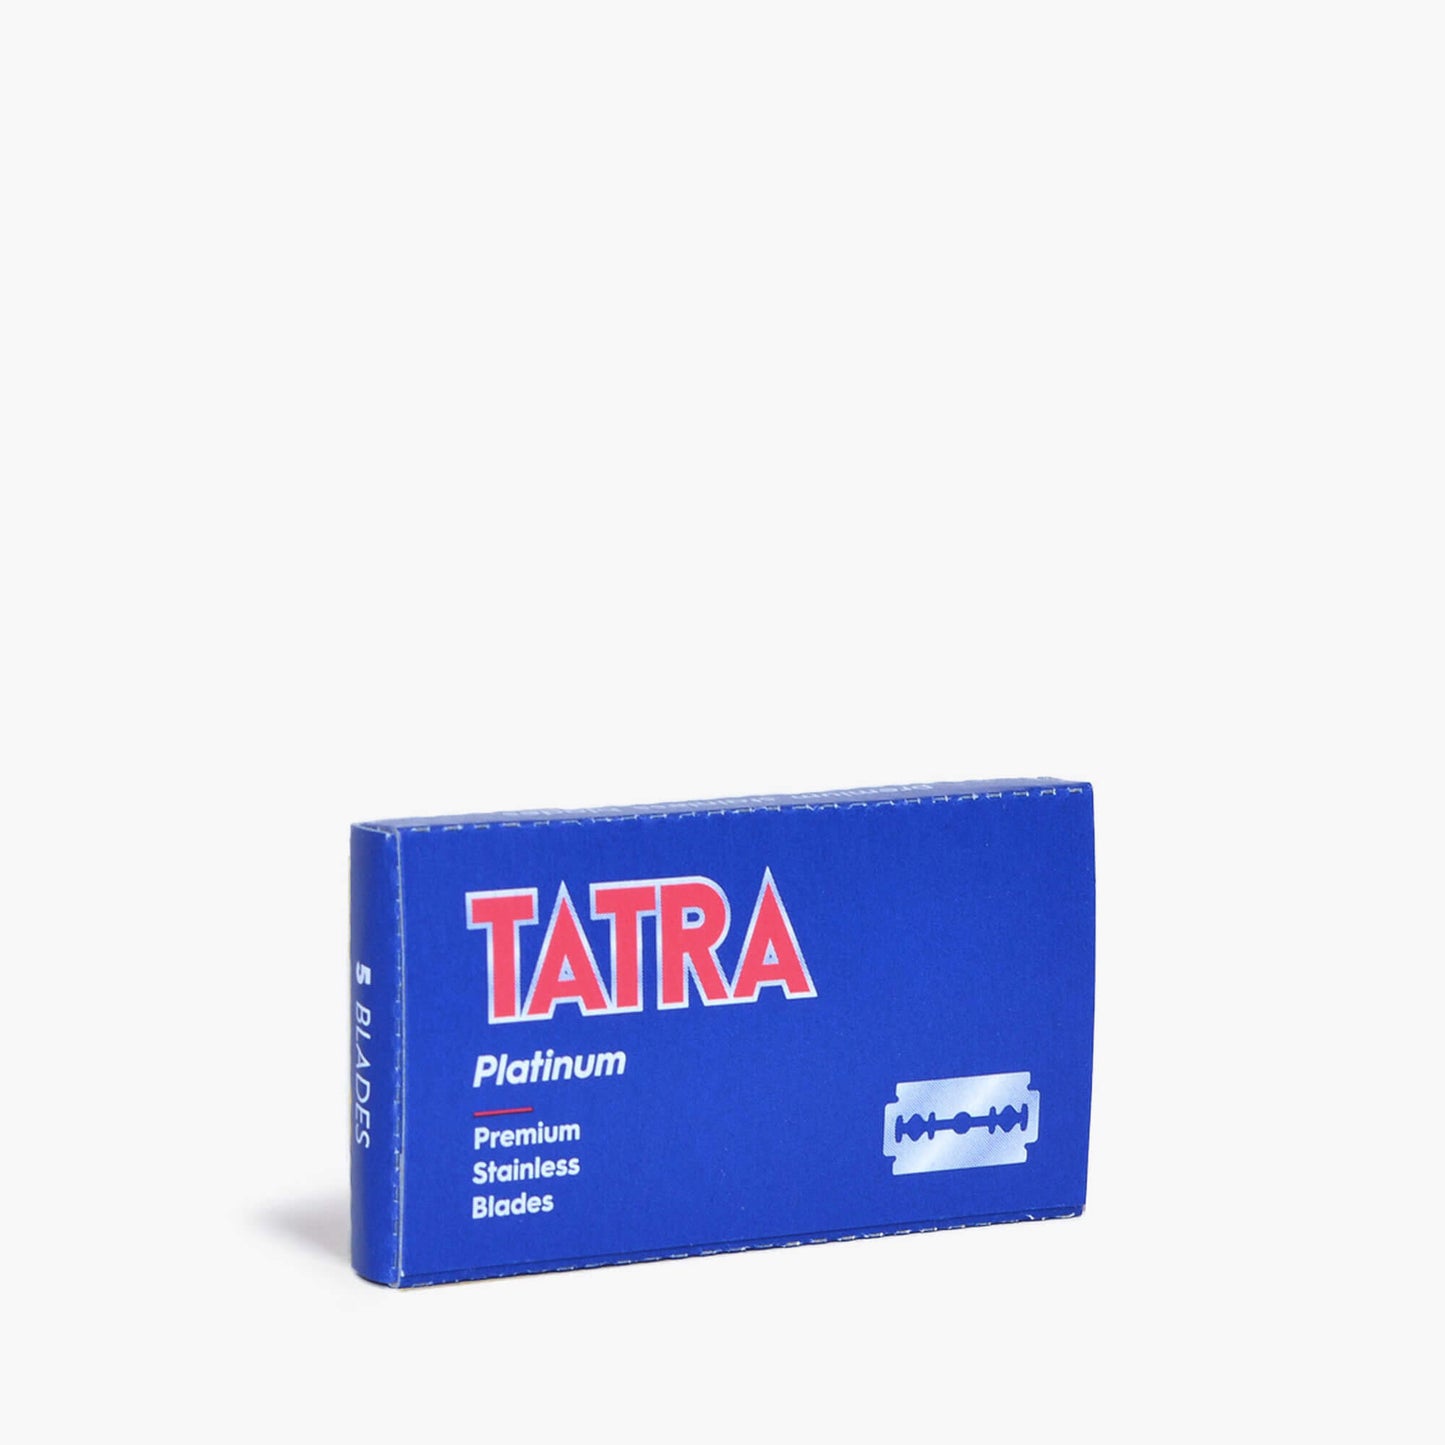 Tatra Platinum Double Edge Razor Blades